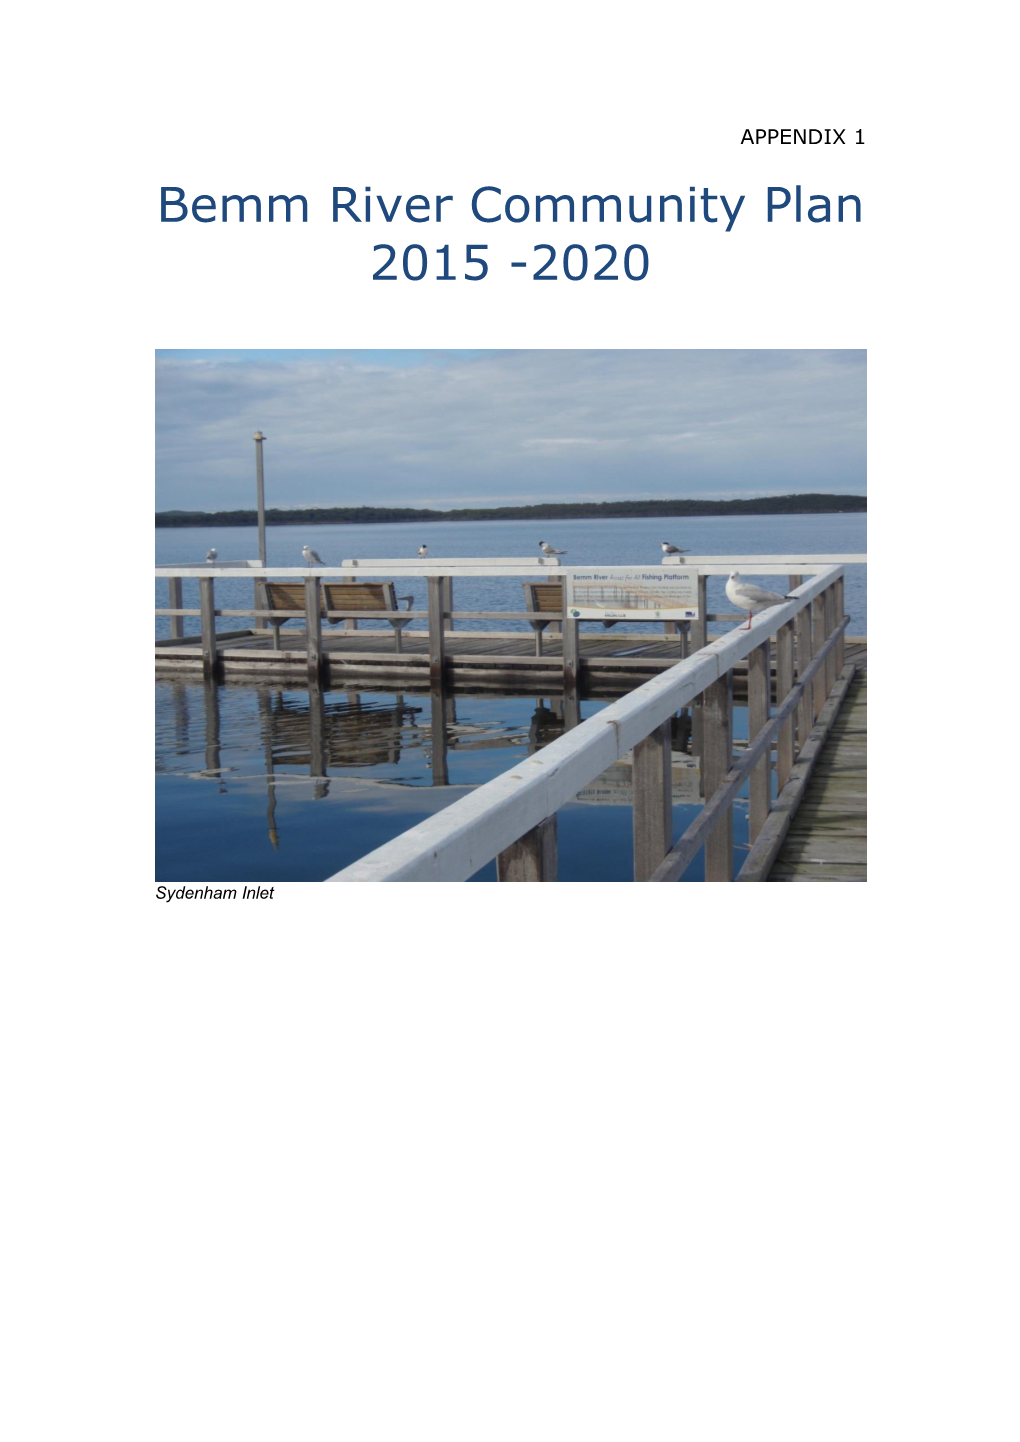 Bemm River Community Plan 2015 -2020